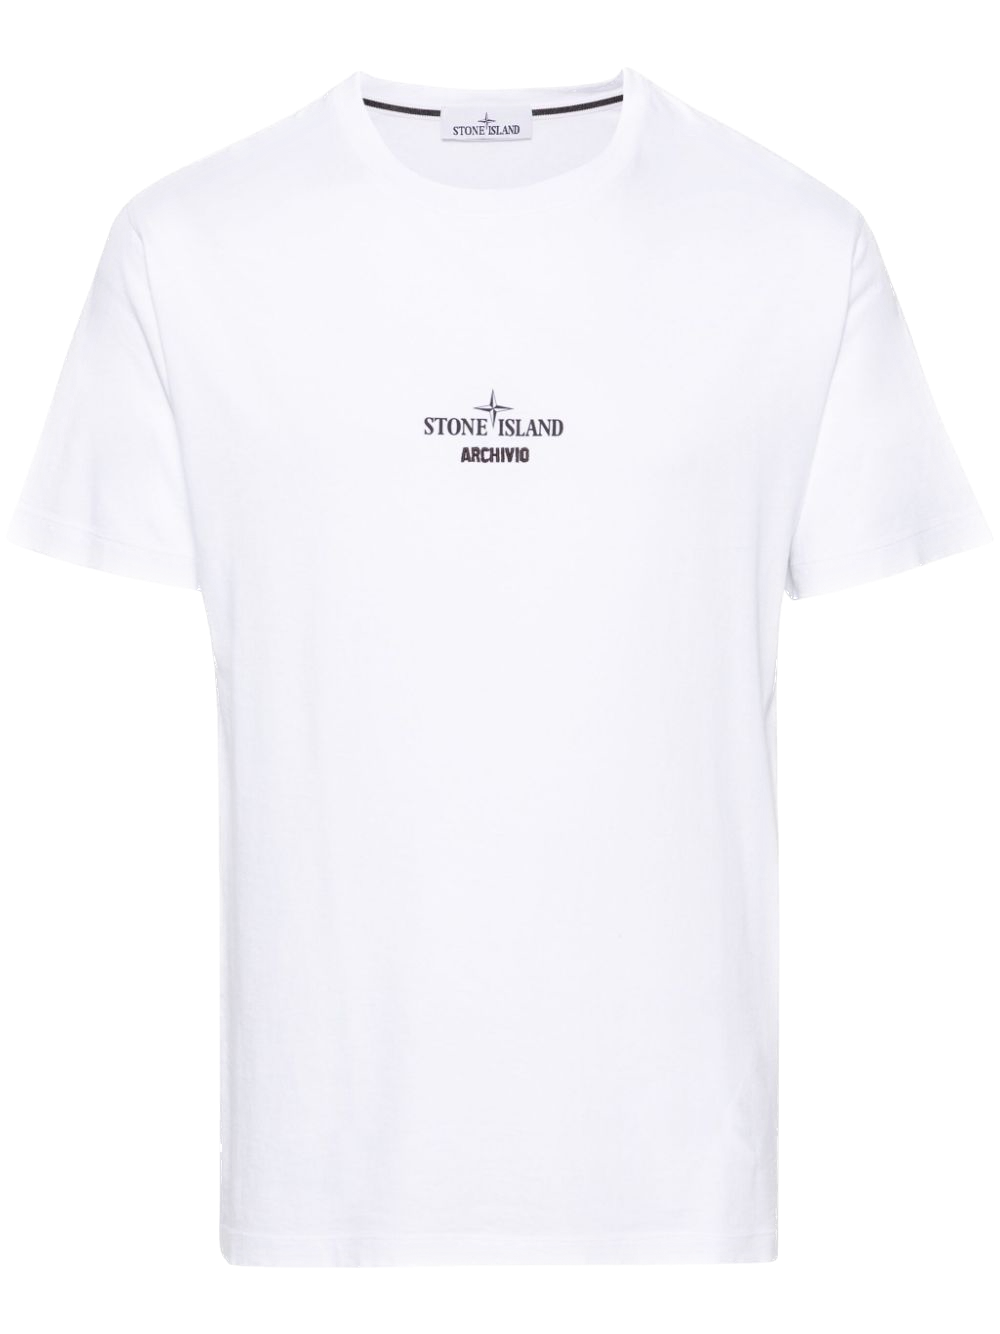 STONE ISLAND - Tee-Shirt Archivio blanc